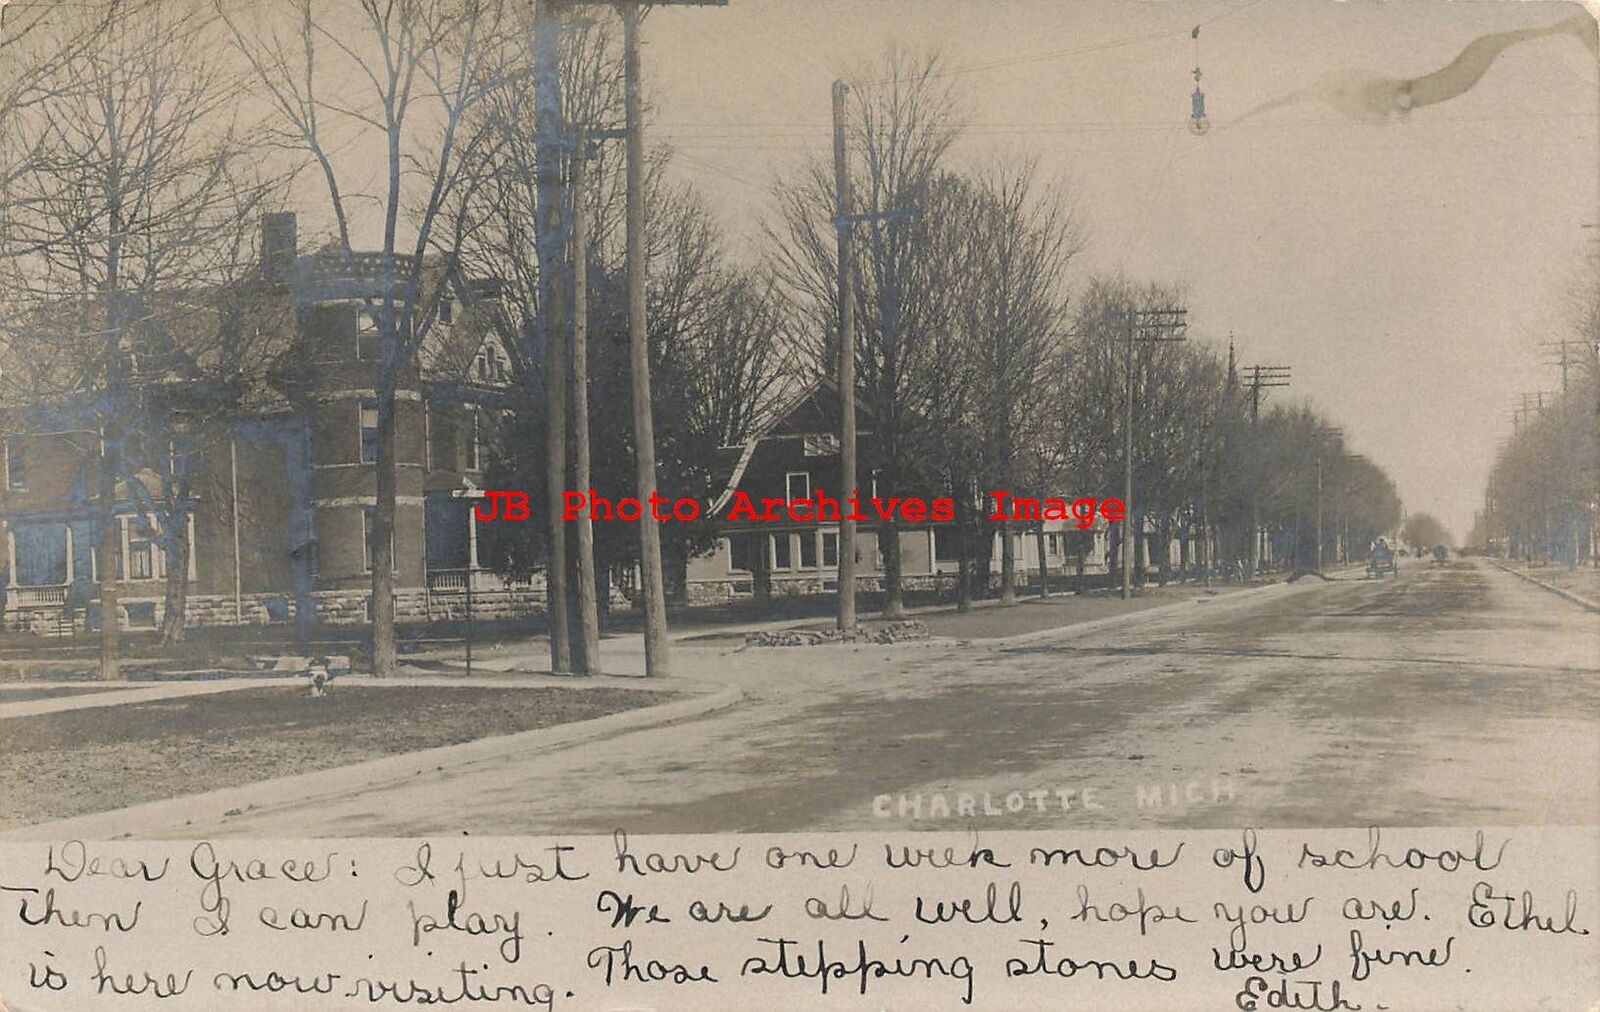 MI, Charlotte, Michigan, RPPC, Street Scene, Homes, 1906 PM, Photo